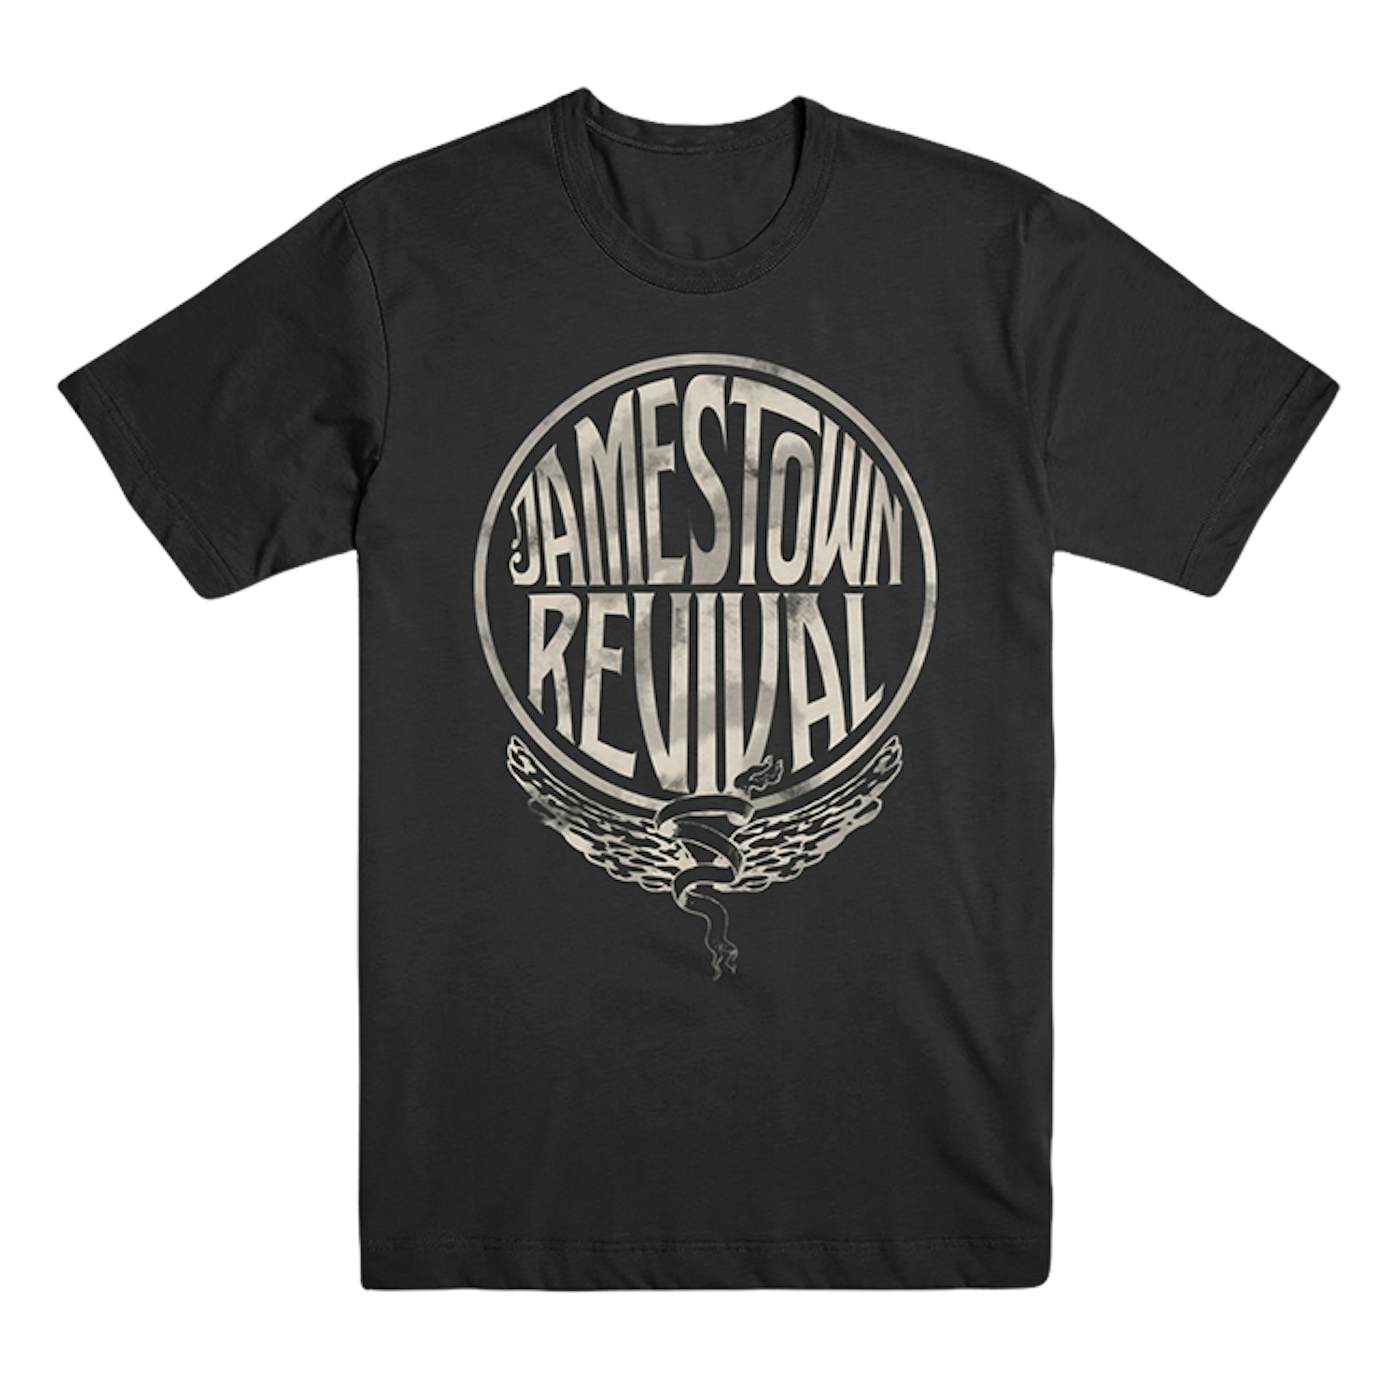 Jamestown Revival Round Logo Tee